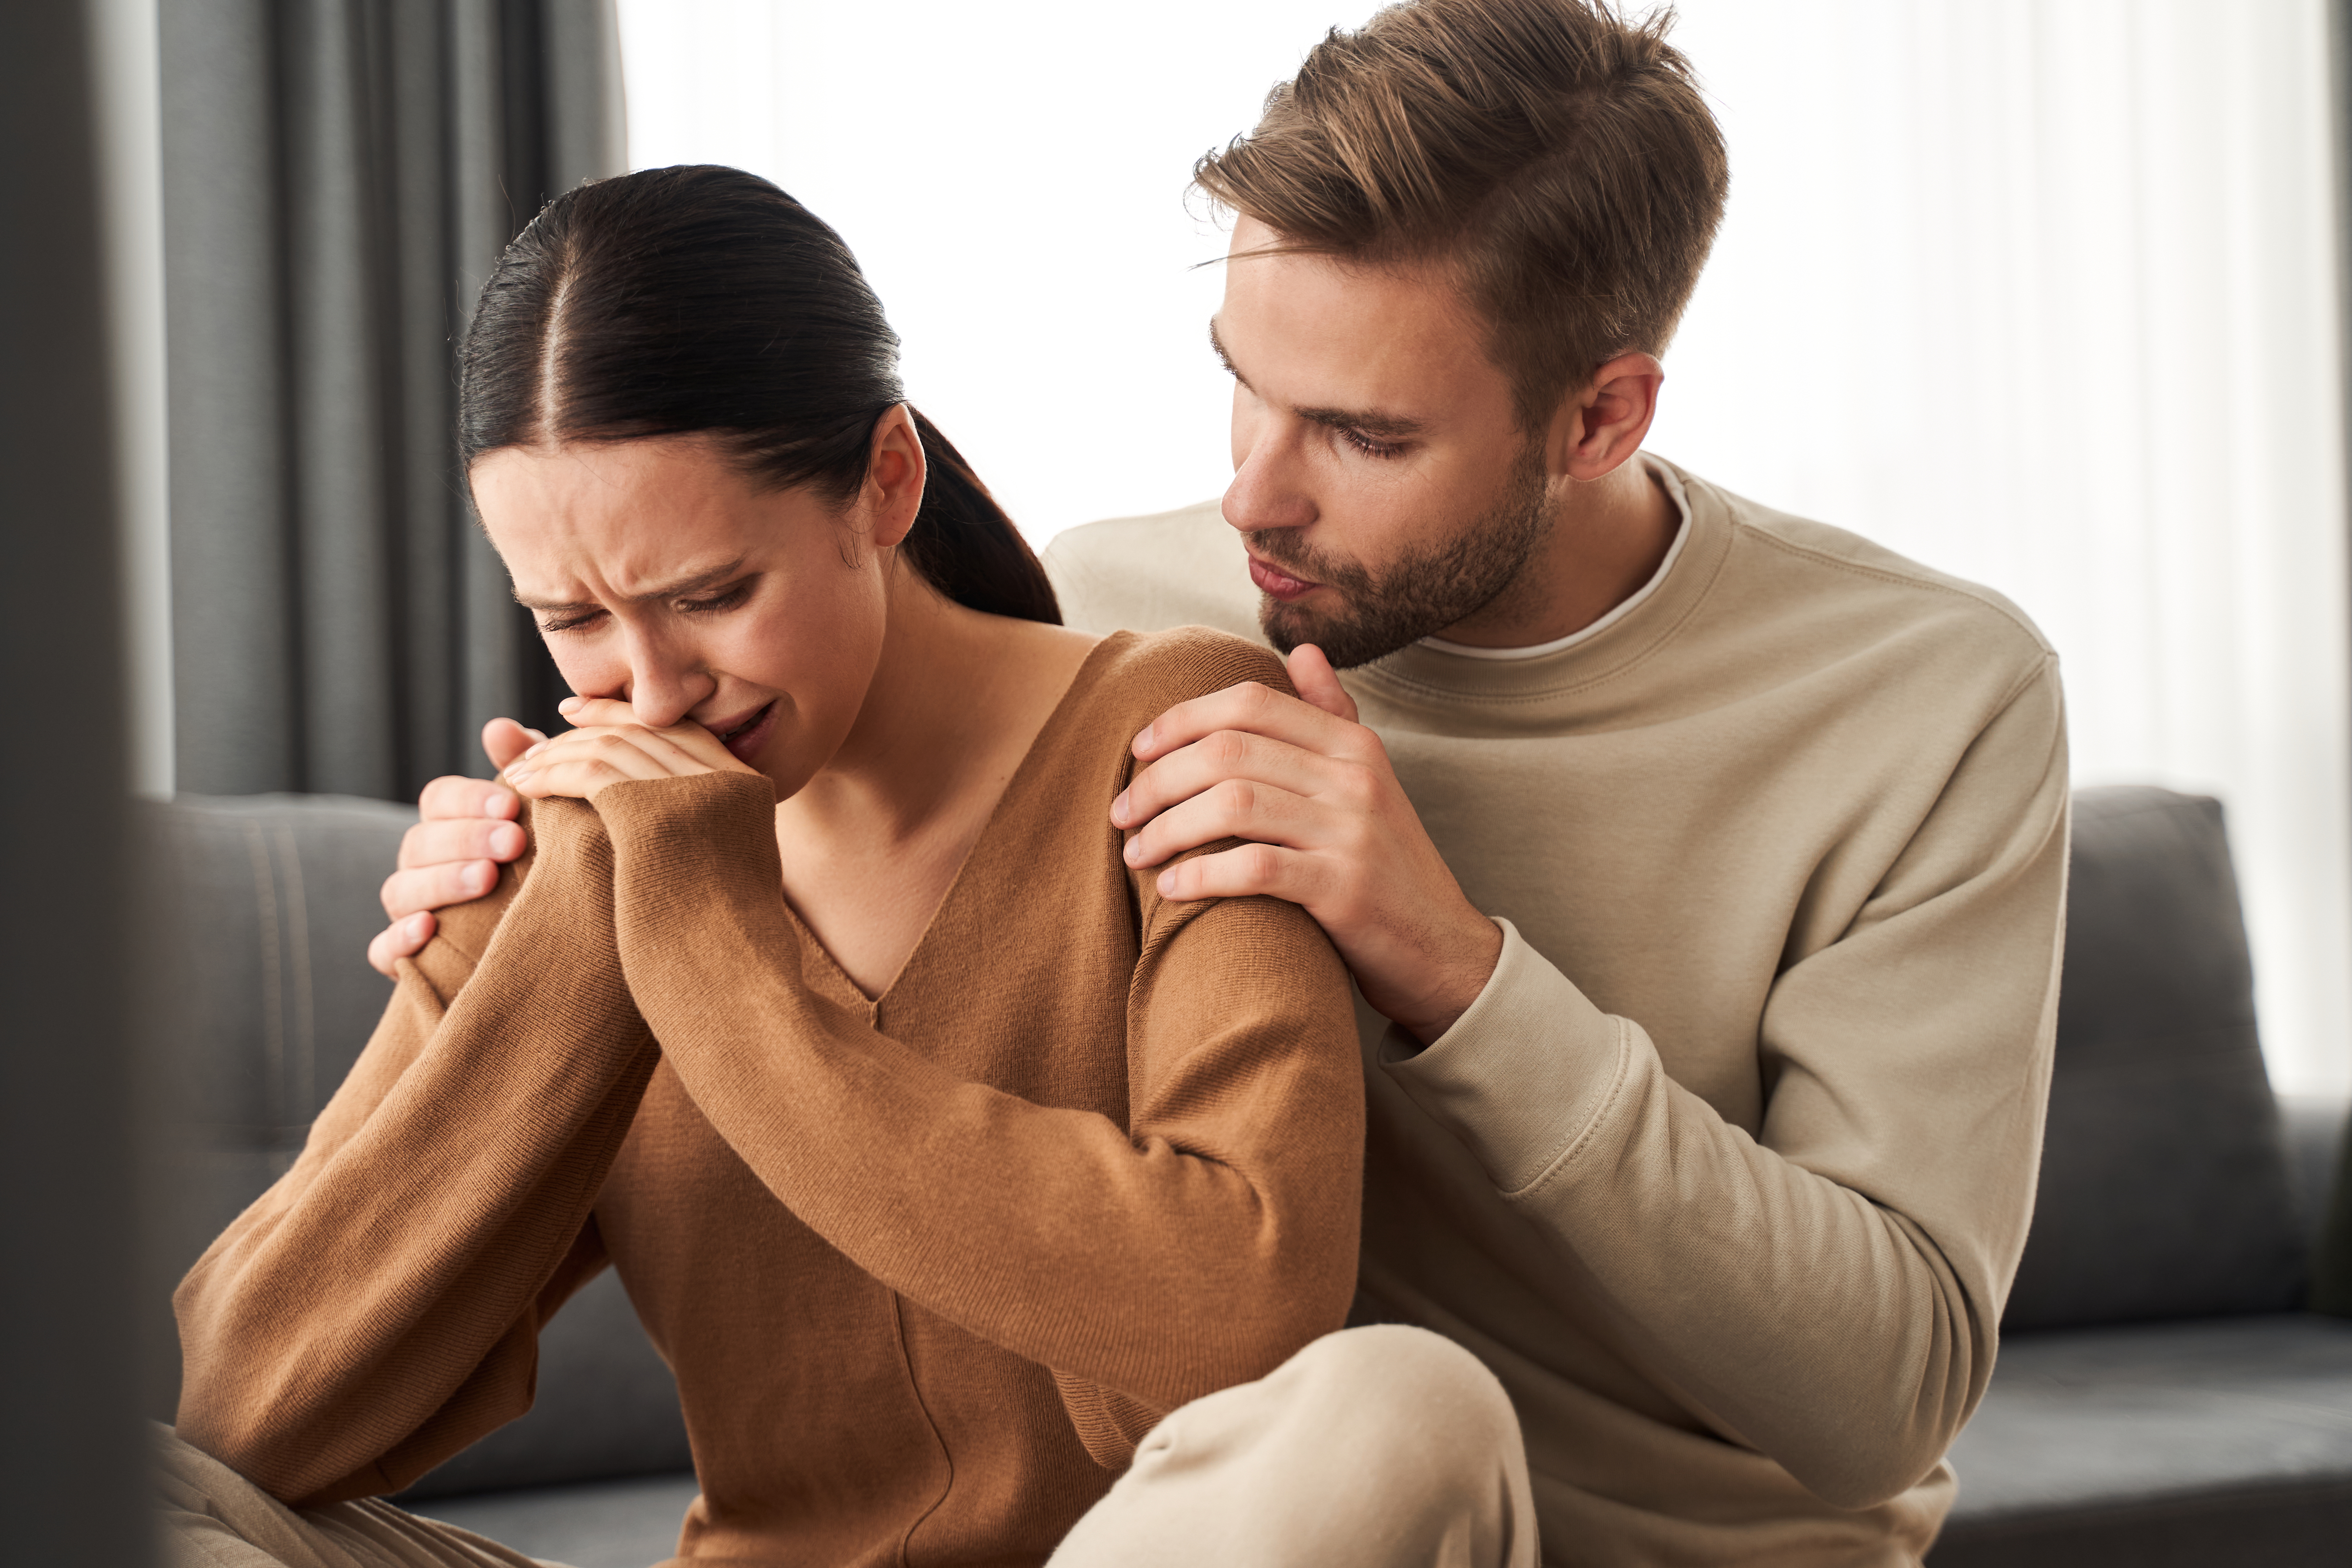 Man calms down crying woman | Shutterstock